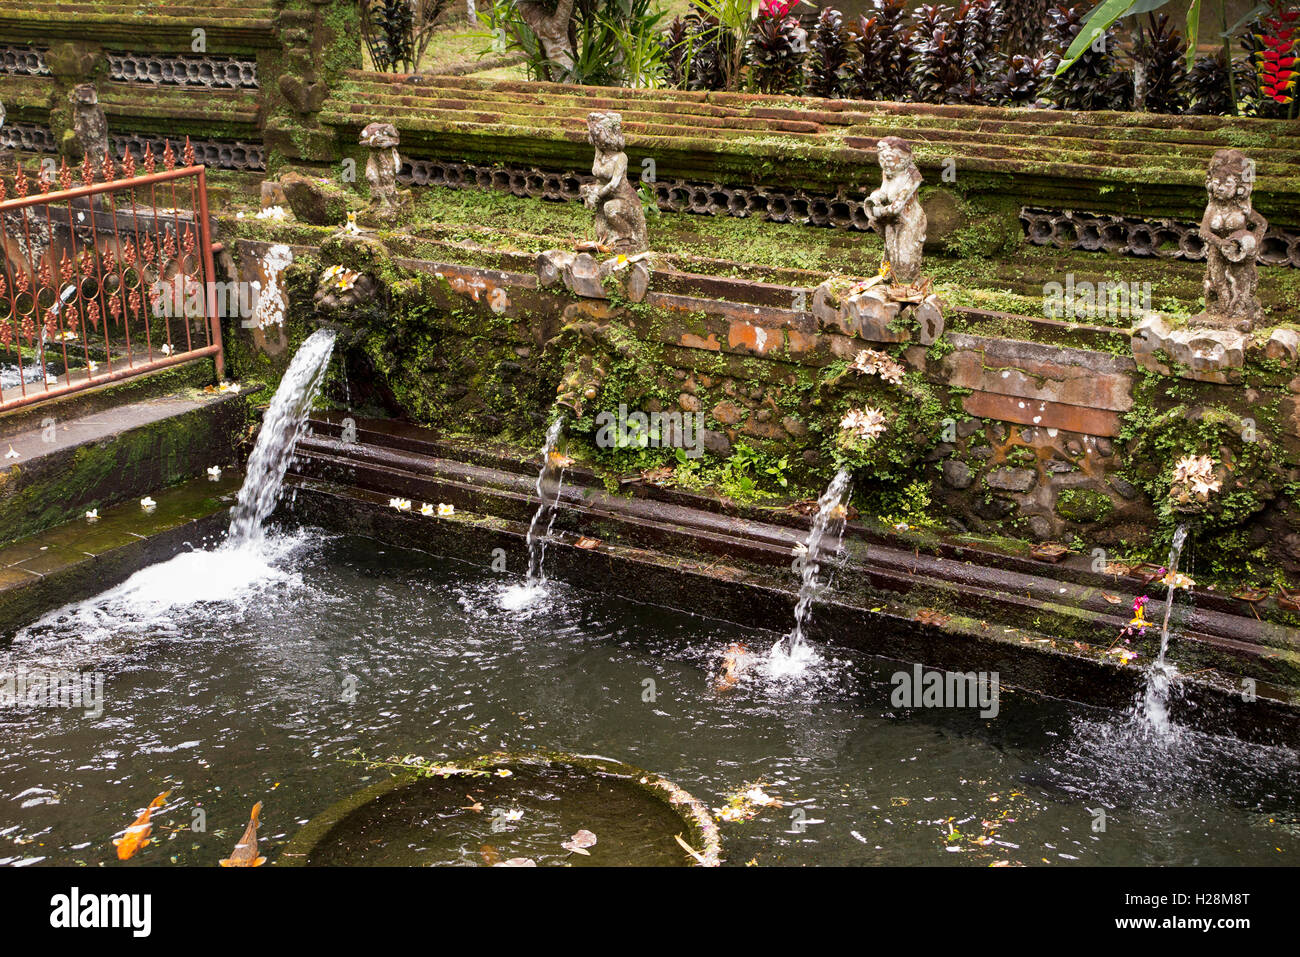 Indonesia, Bali, Sebatu, Pura Gunung Kawi Hindu temple, ritual bathing pool Stock Photo